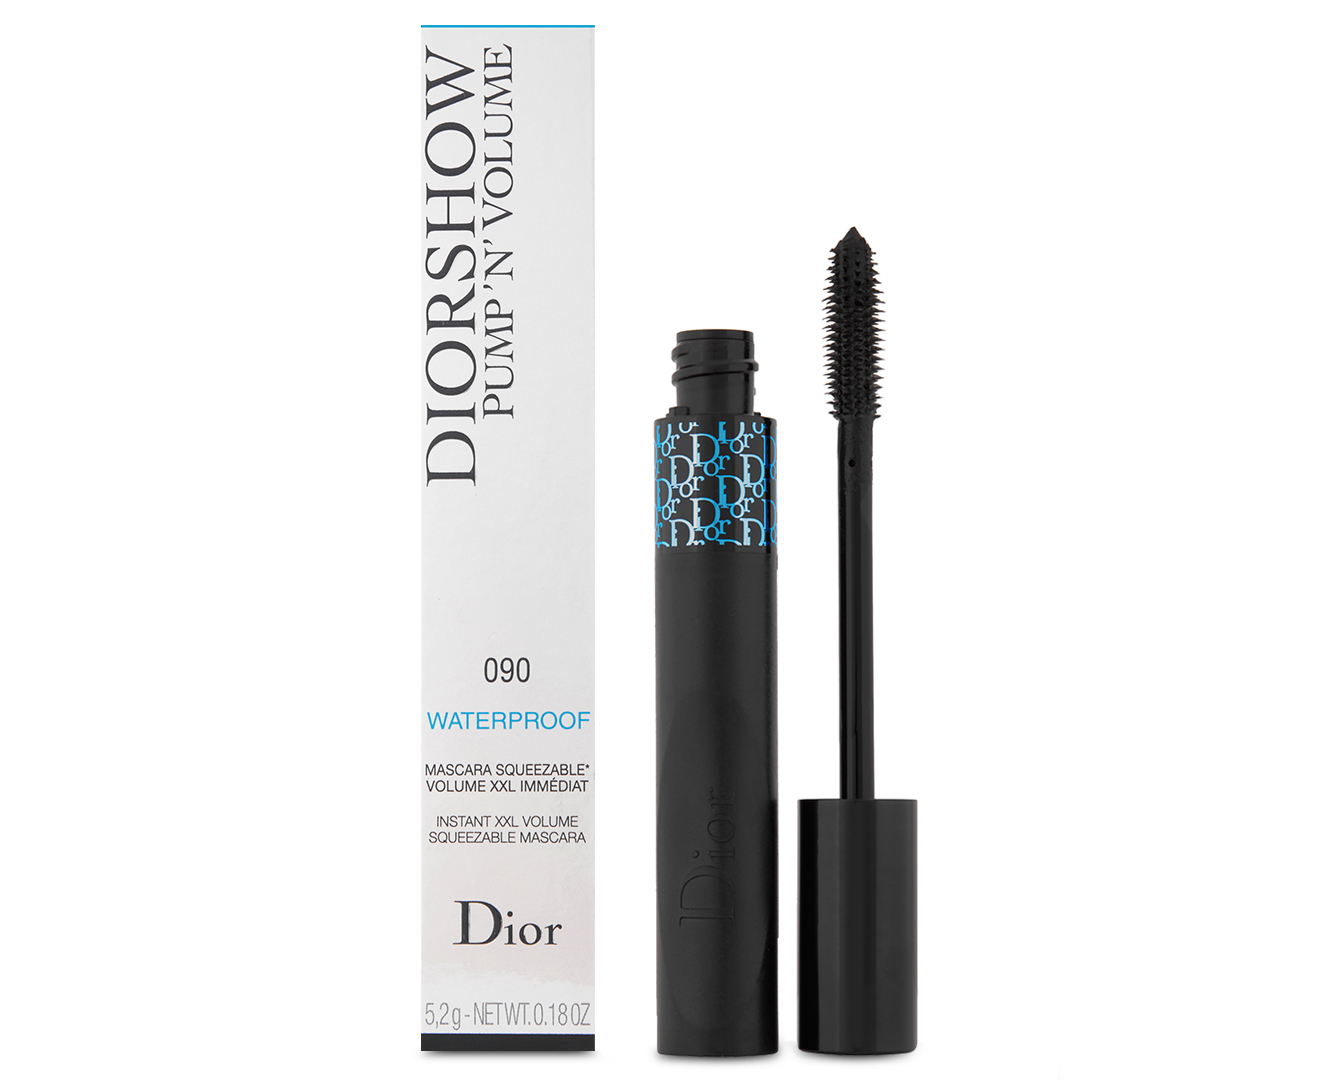 Dior Diorshow Pump N Volume Mascara Review  Escentuals Blog